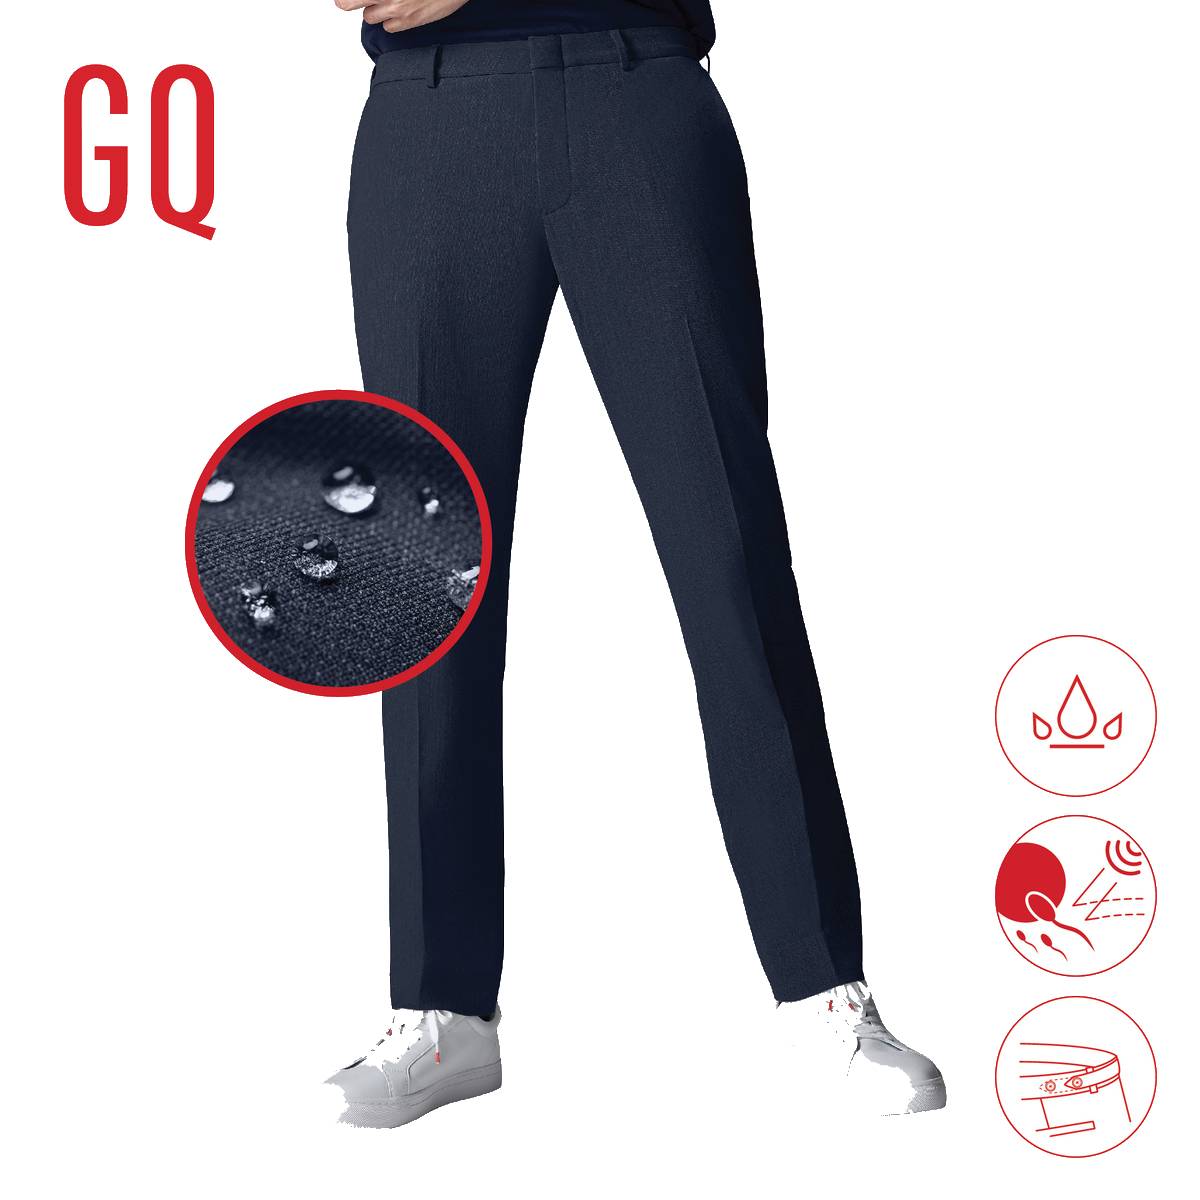 GQ Perfect Pants ที่สุดแห่งกางเกง สีกรมท่า